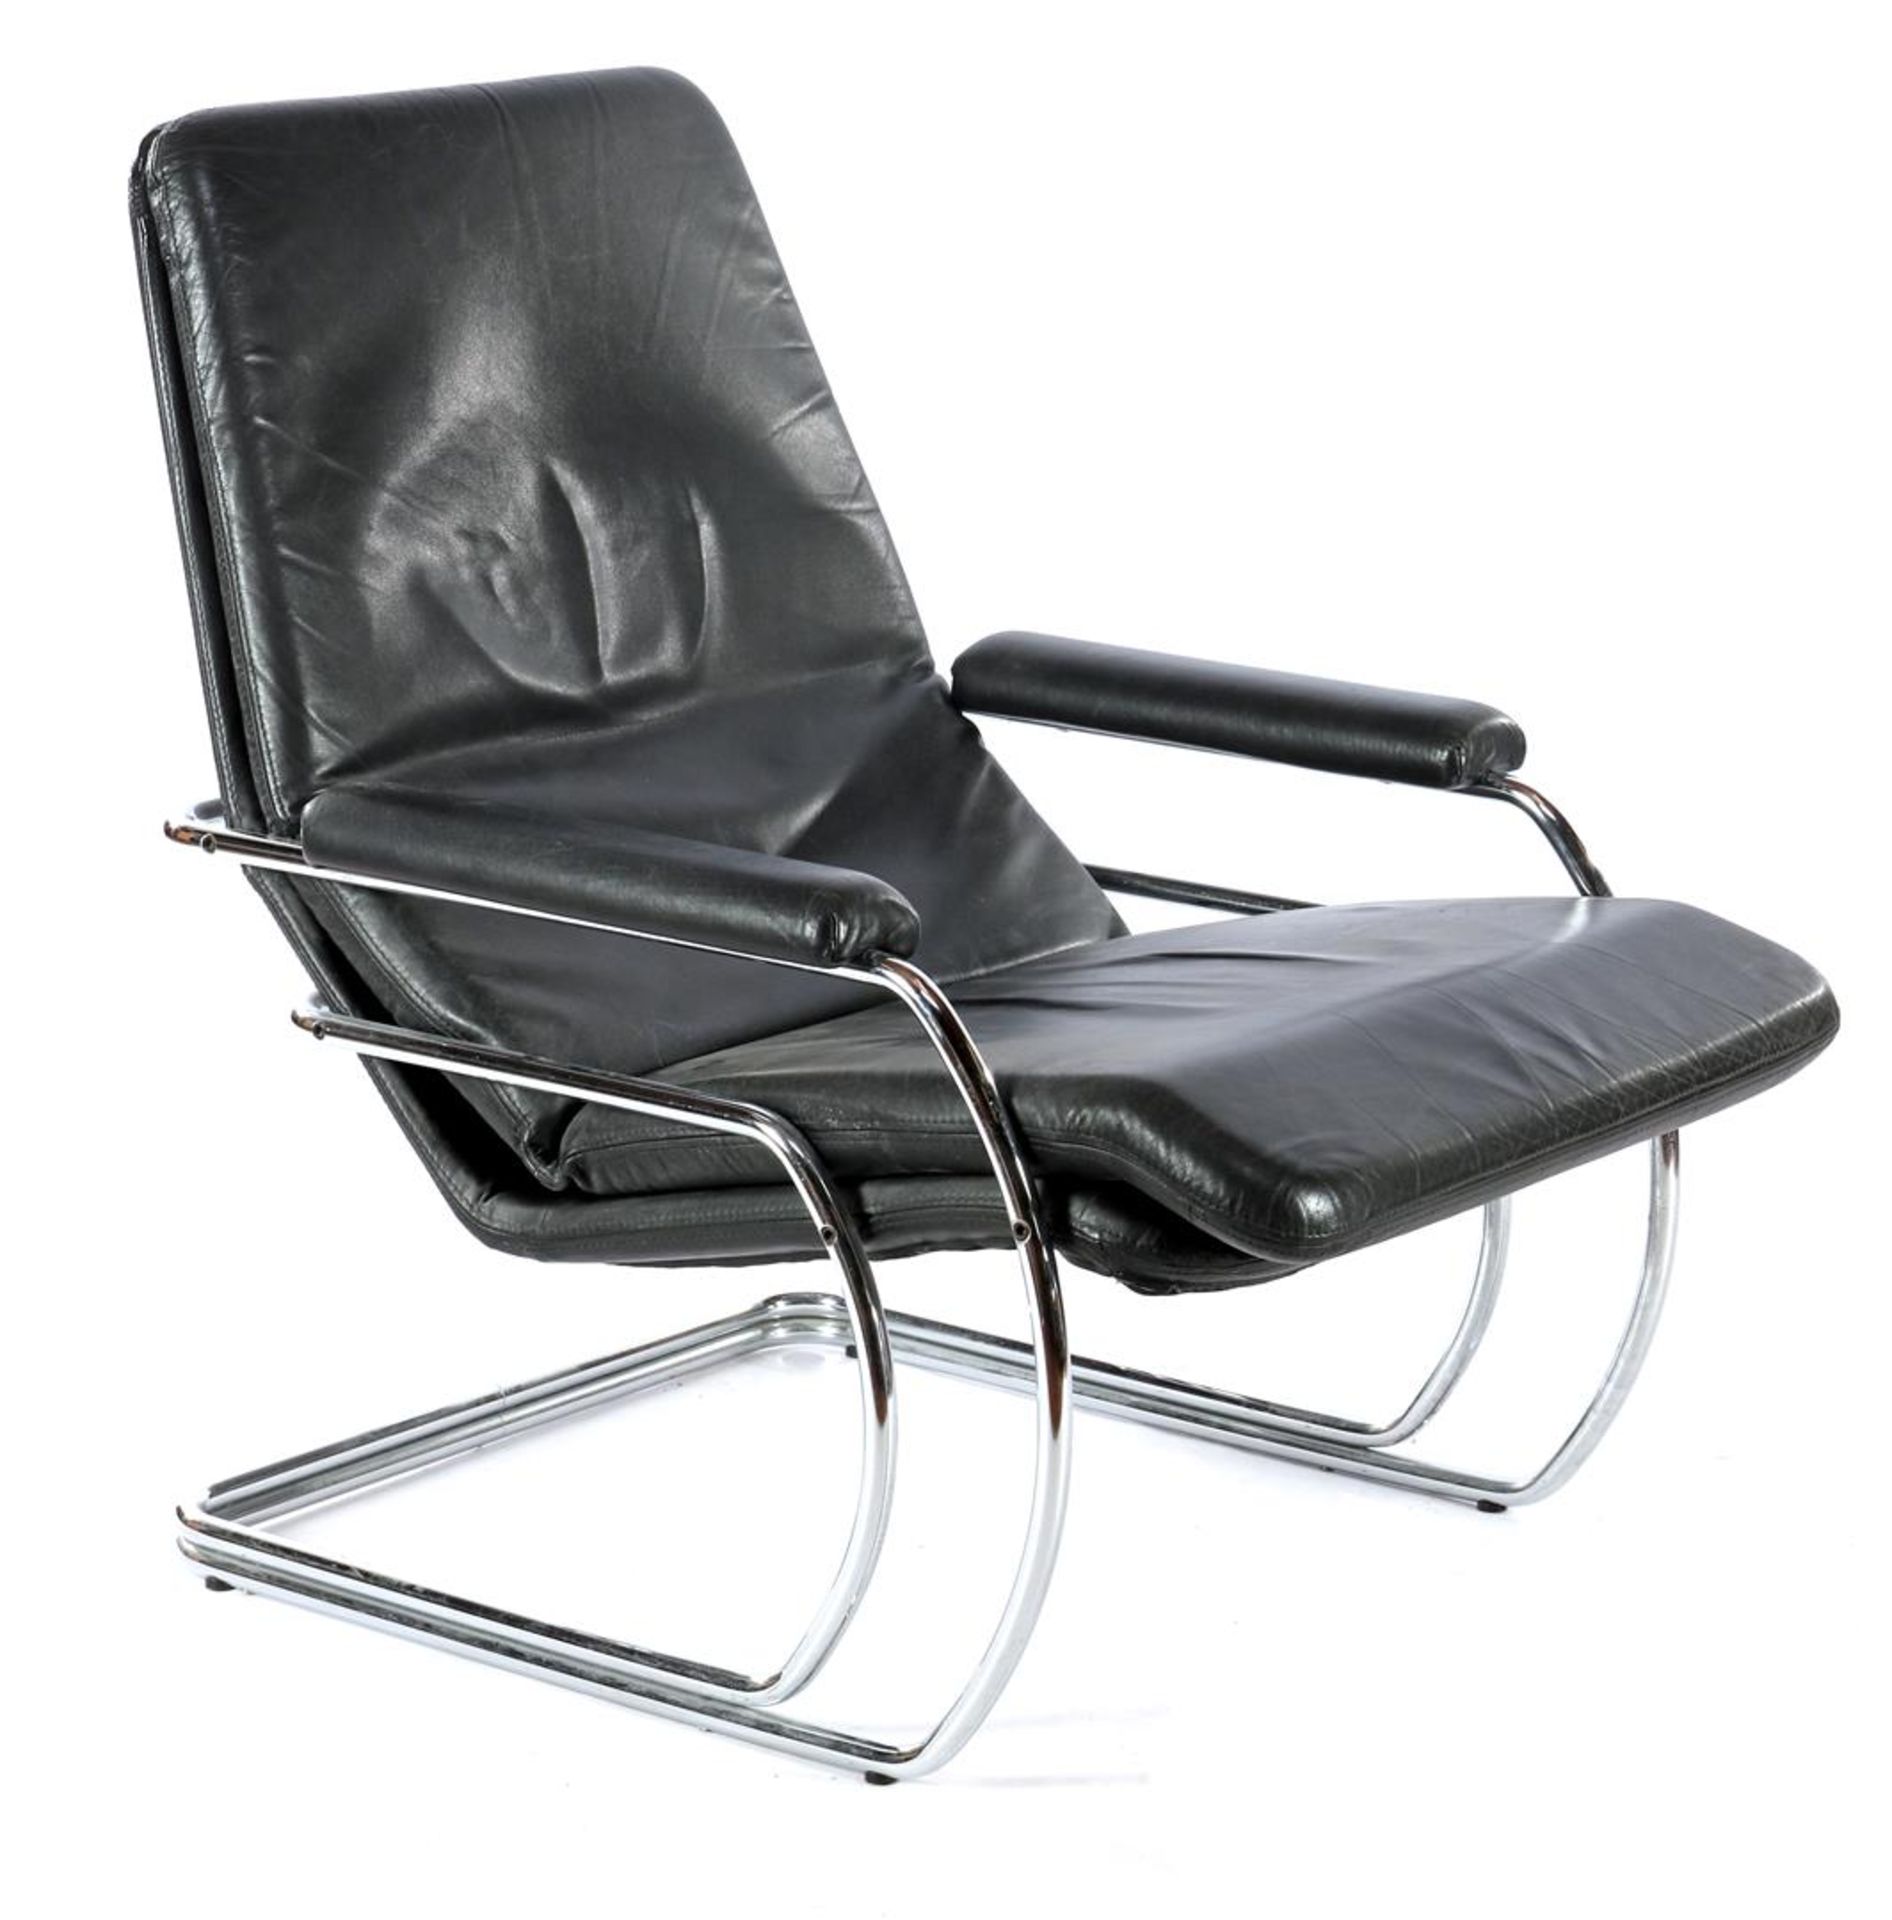 Chromed metal arm chair